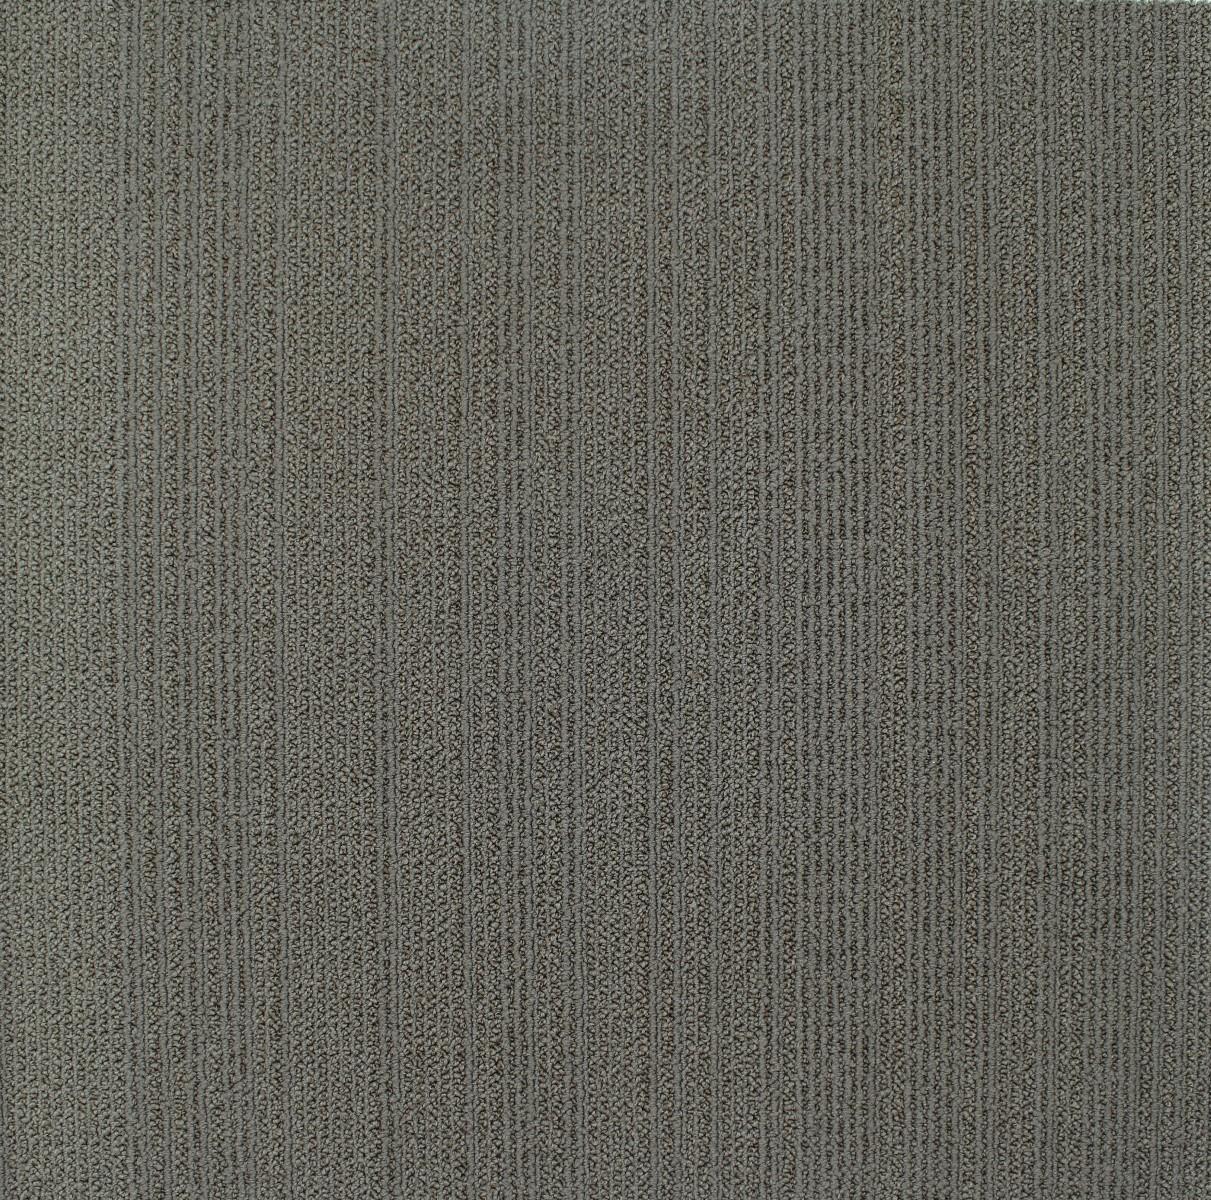 Carpet Tile Desso Skin leather Gri-50cmx50cm-4 PCs